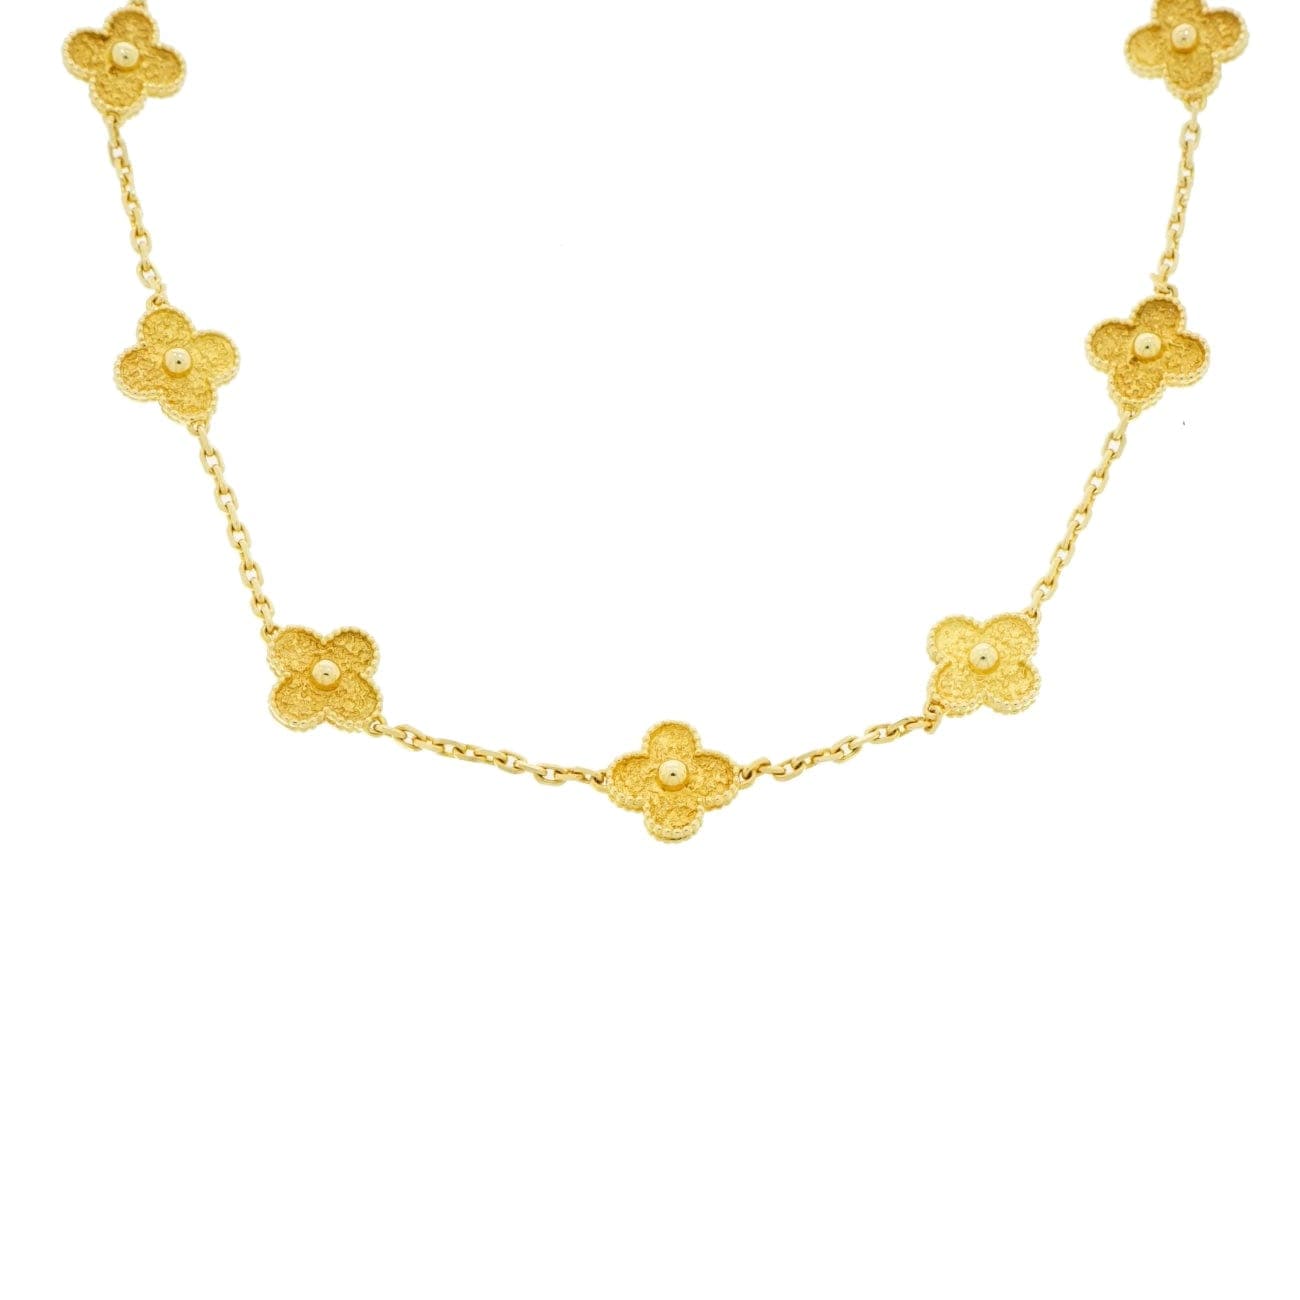 Vintage Alhambra necklace, 10 motifs 18K yellow gold - Van Cleef & Arpels